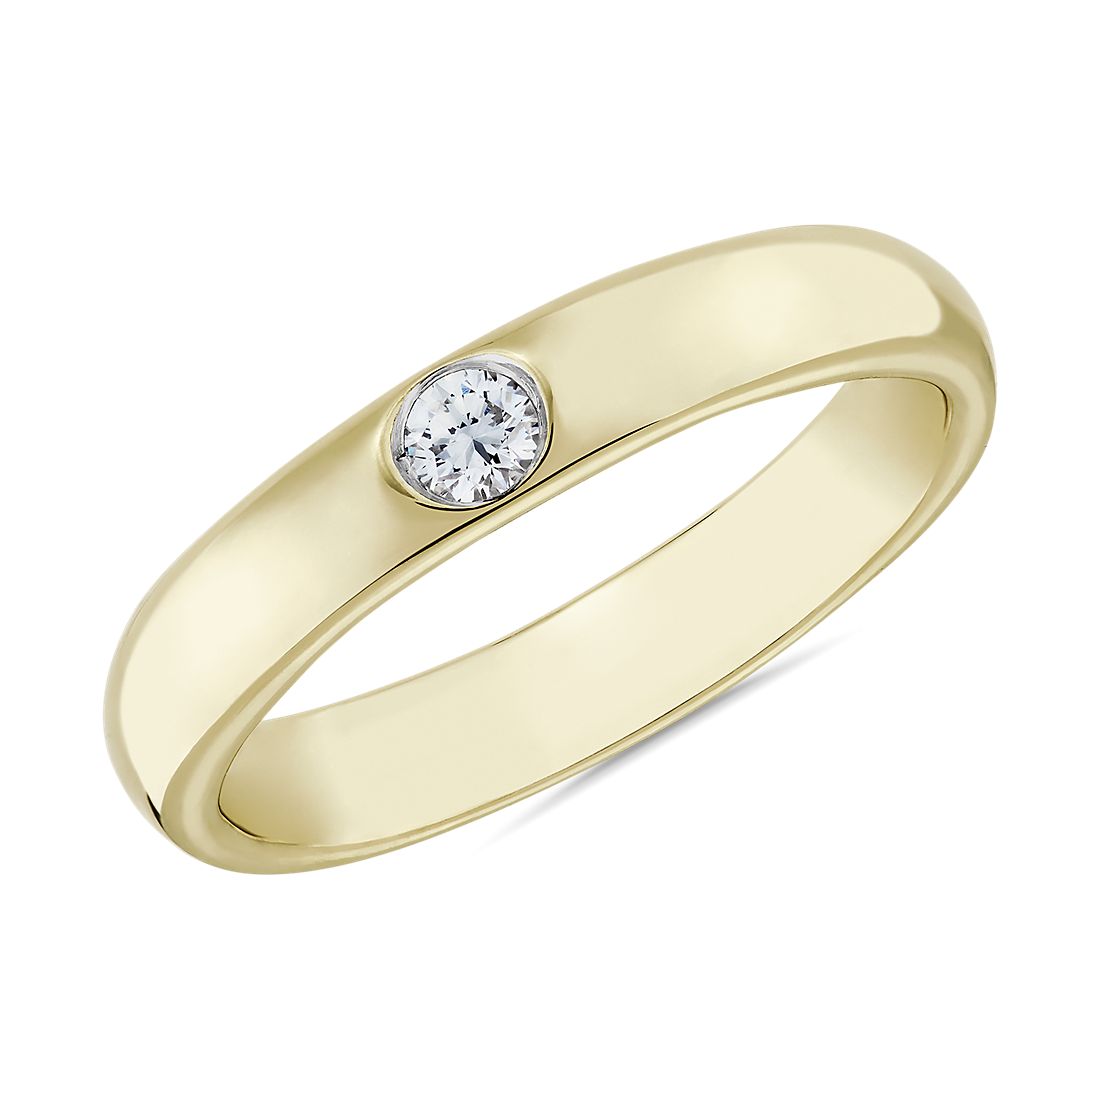 ZAC ZAC POSEN Single Round Diamond Ring in 14k Yellow Gold (3.5 mm, 1/12 ct. tw.)